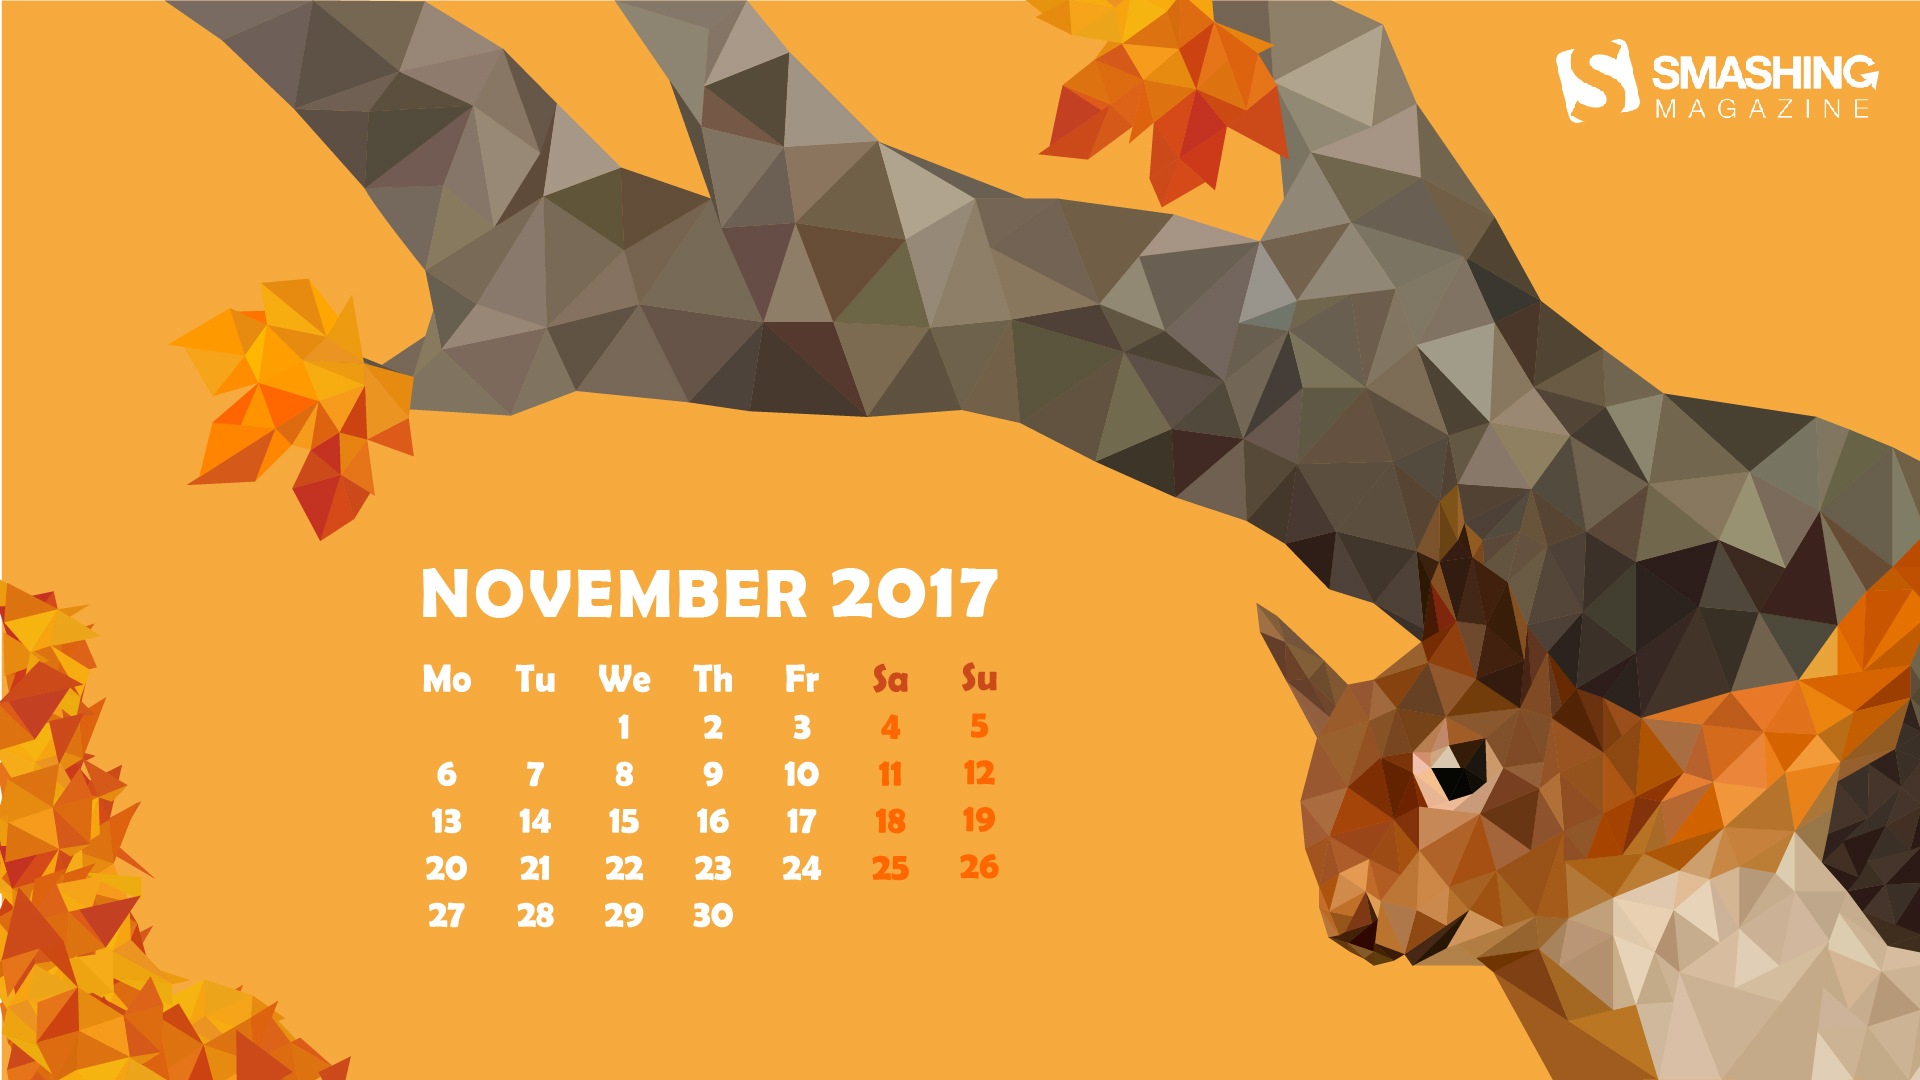 November 2017 calendar wallpaper #7 - 1920x1080